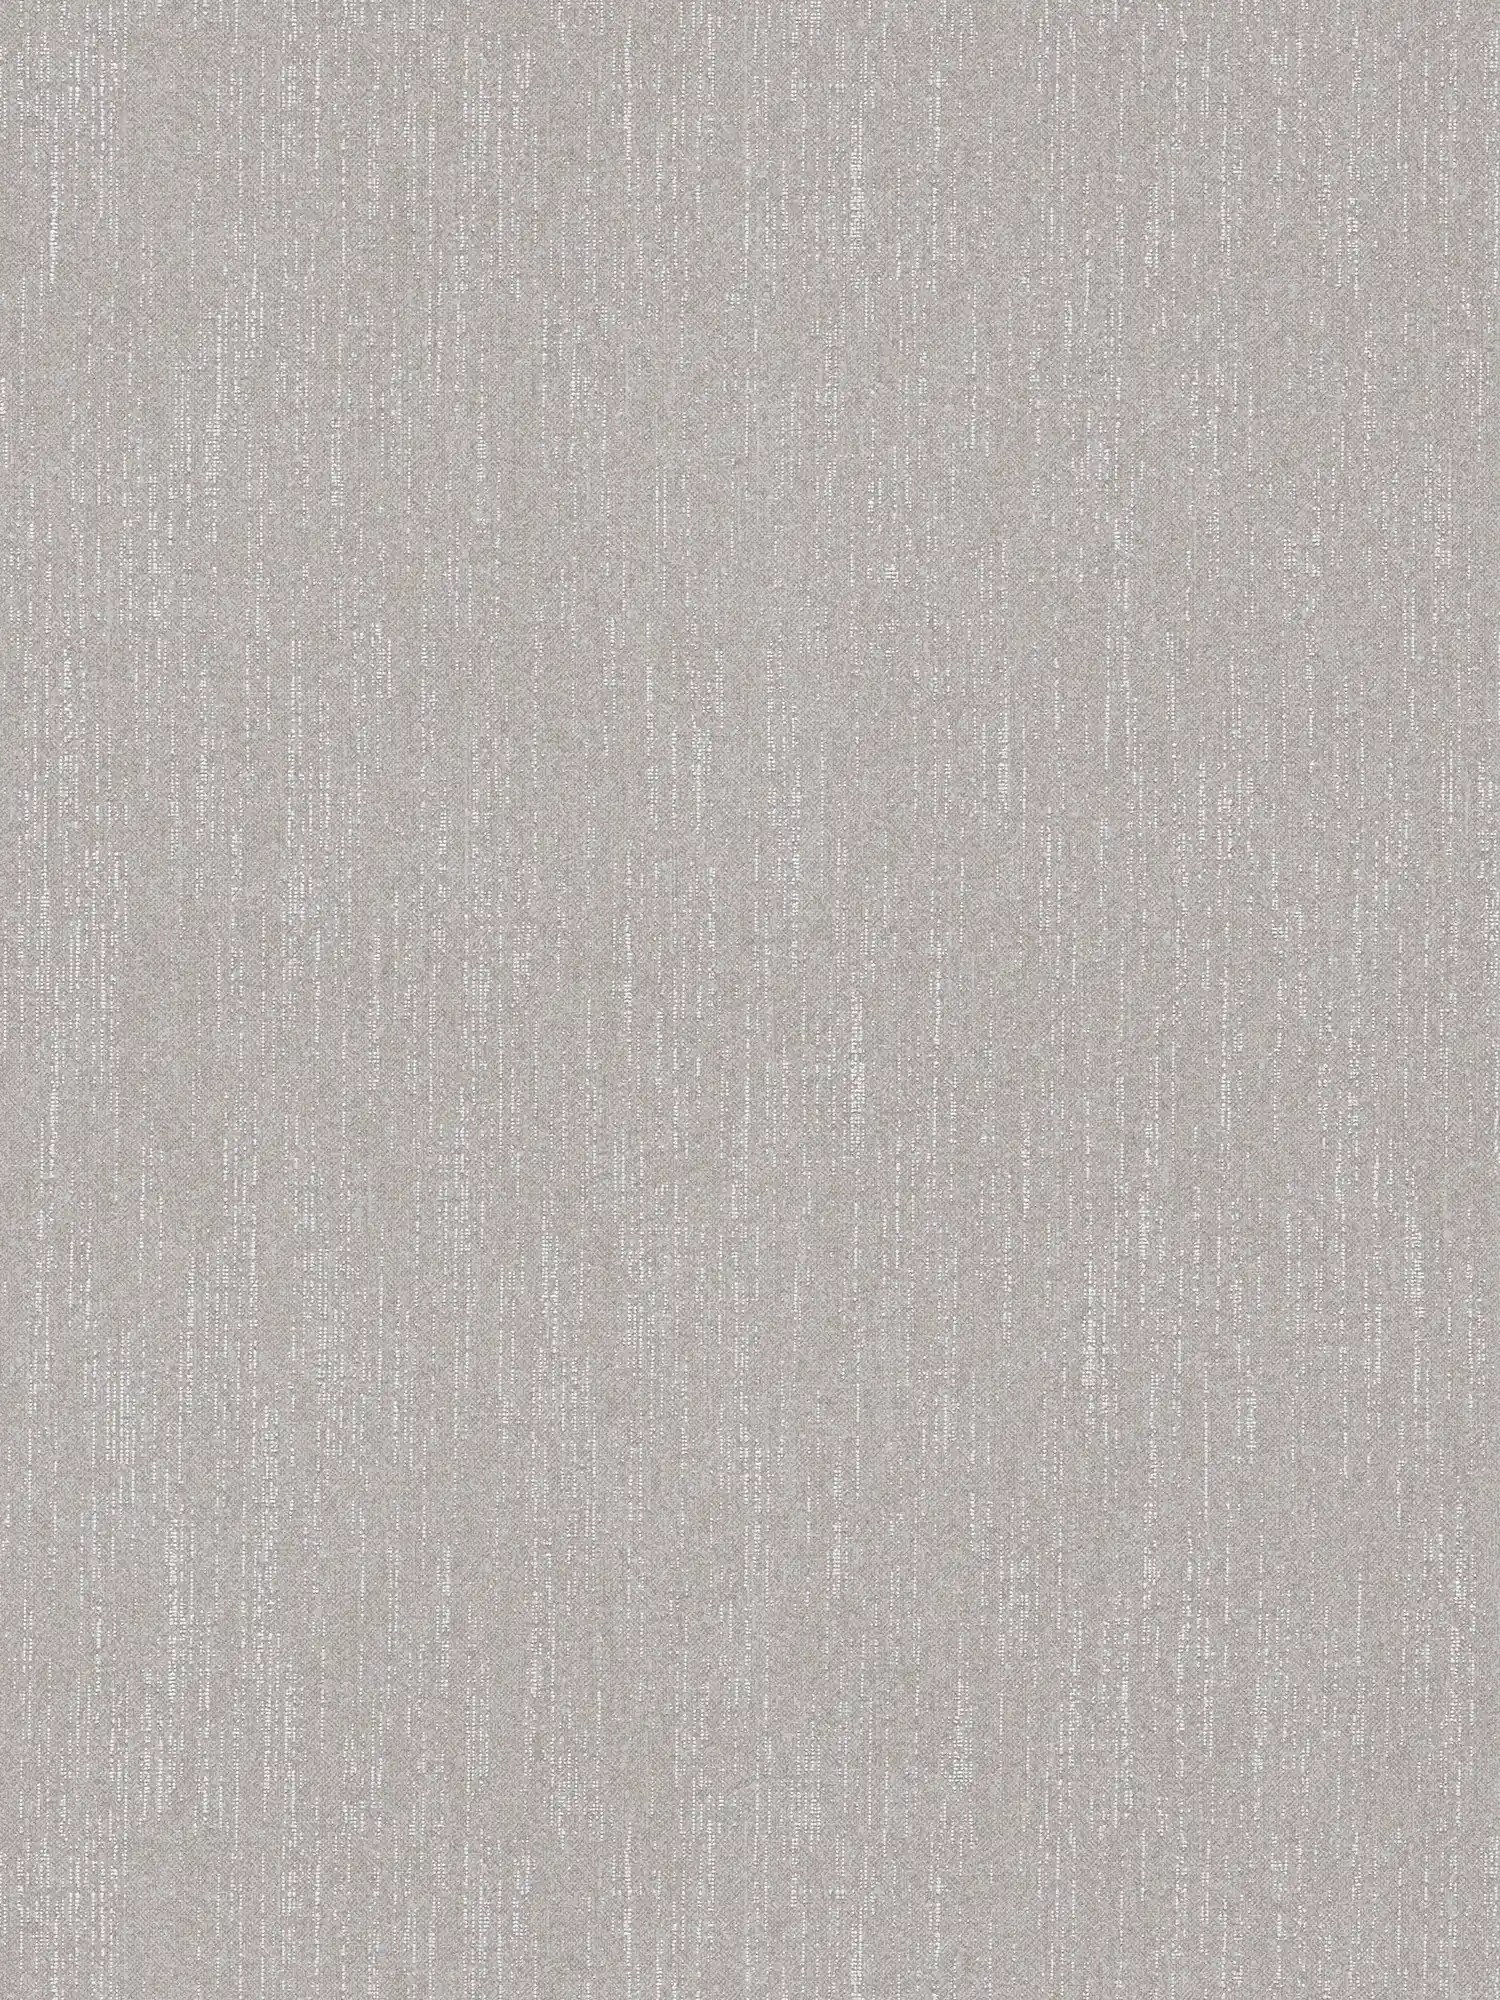 Einfarbige Tapete Silbergrau mit Bouclé Effekt – Grau
